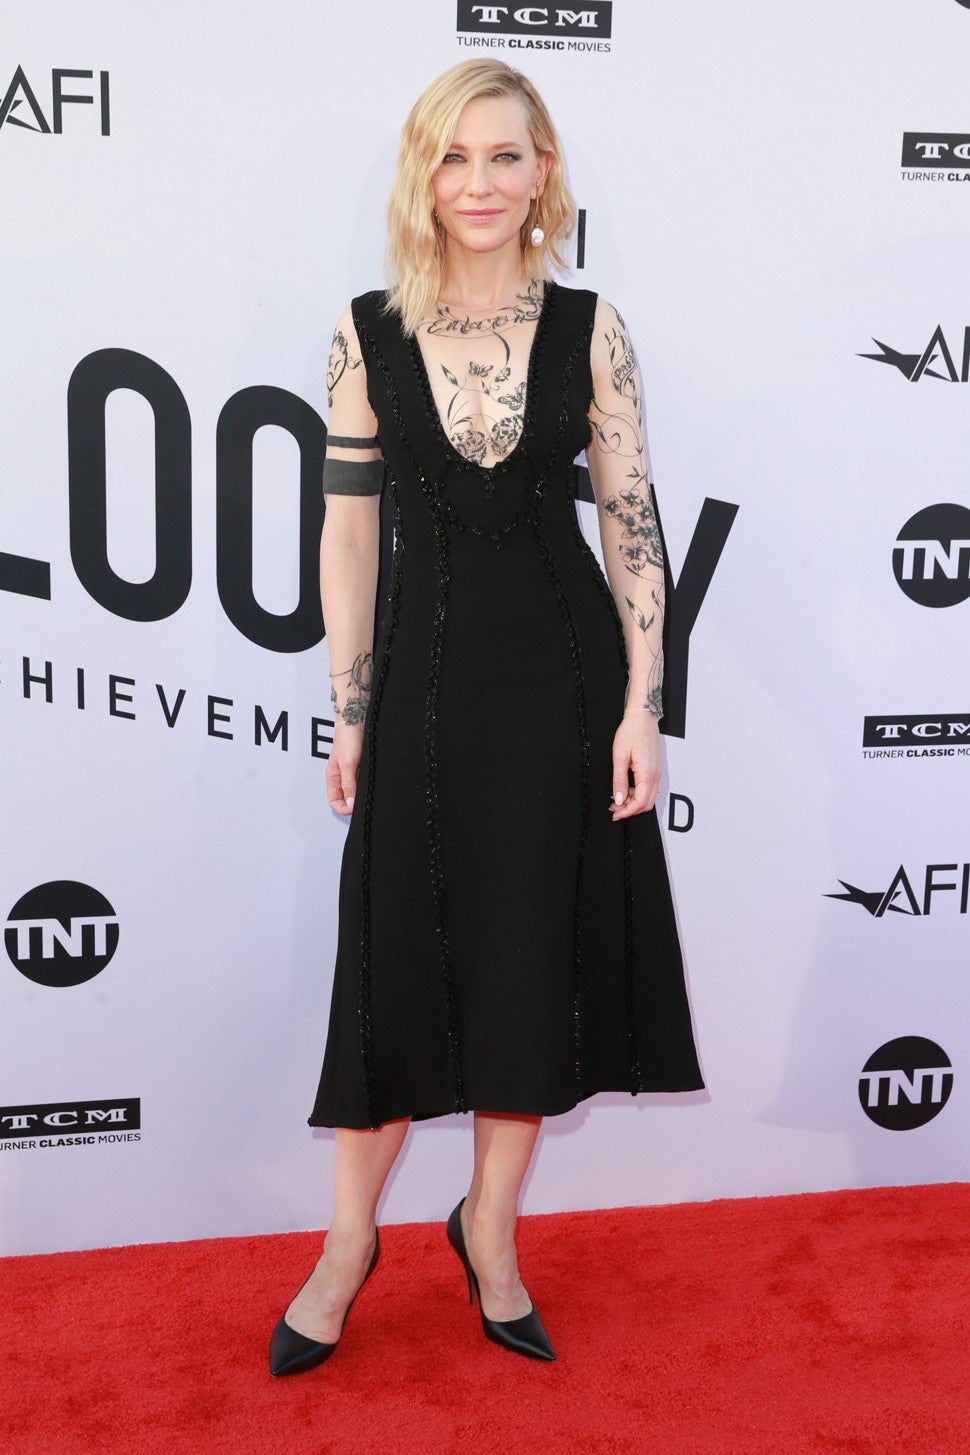 Cate Blanchett celebrates Oscars win with tattoo  Celebrity News  Showbiz   TV  Expresscouk